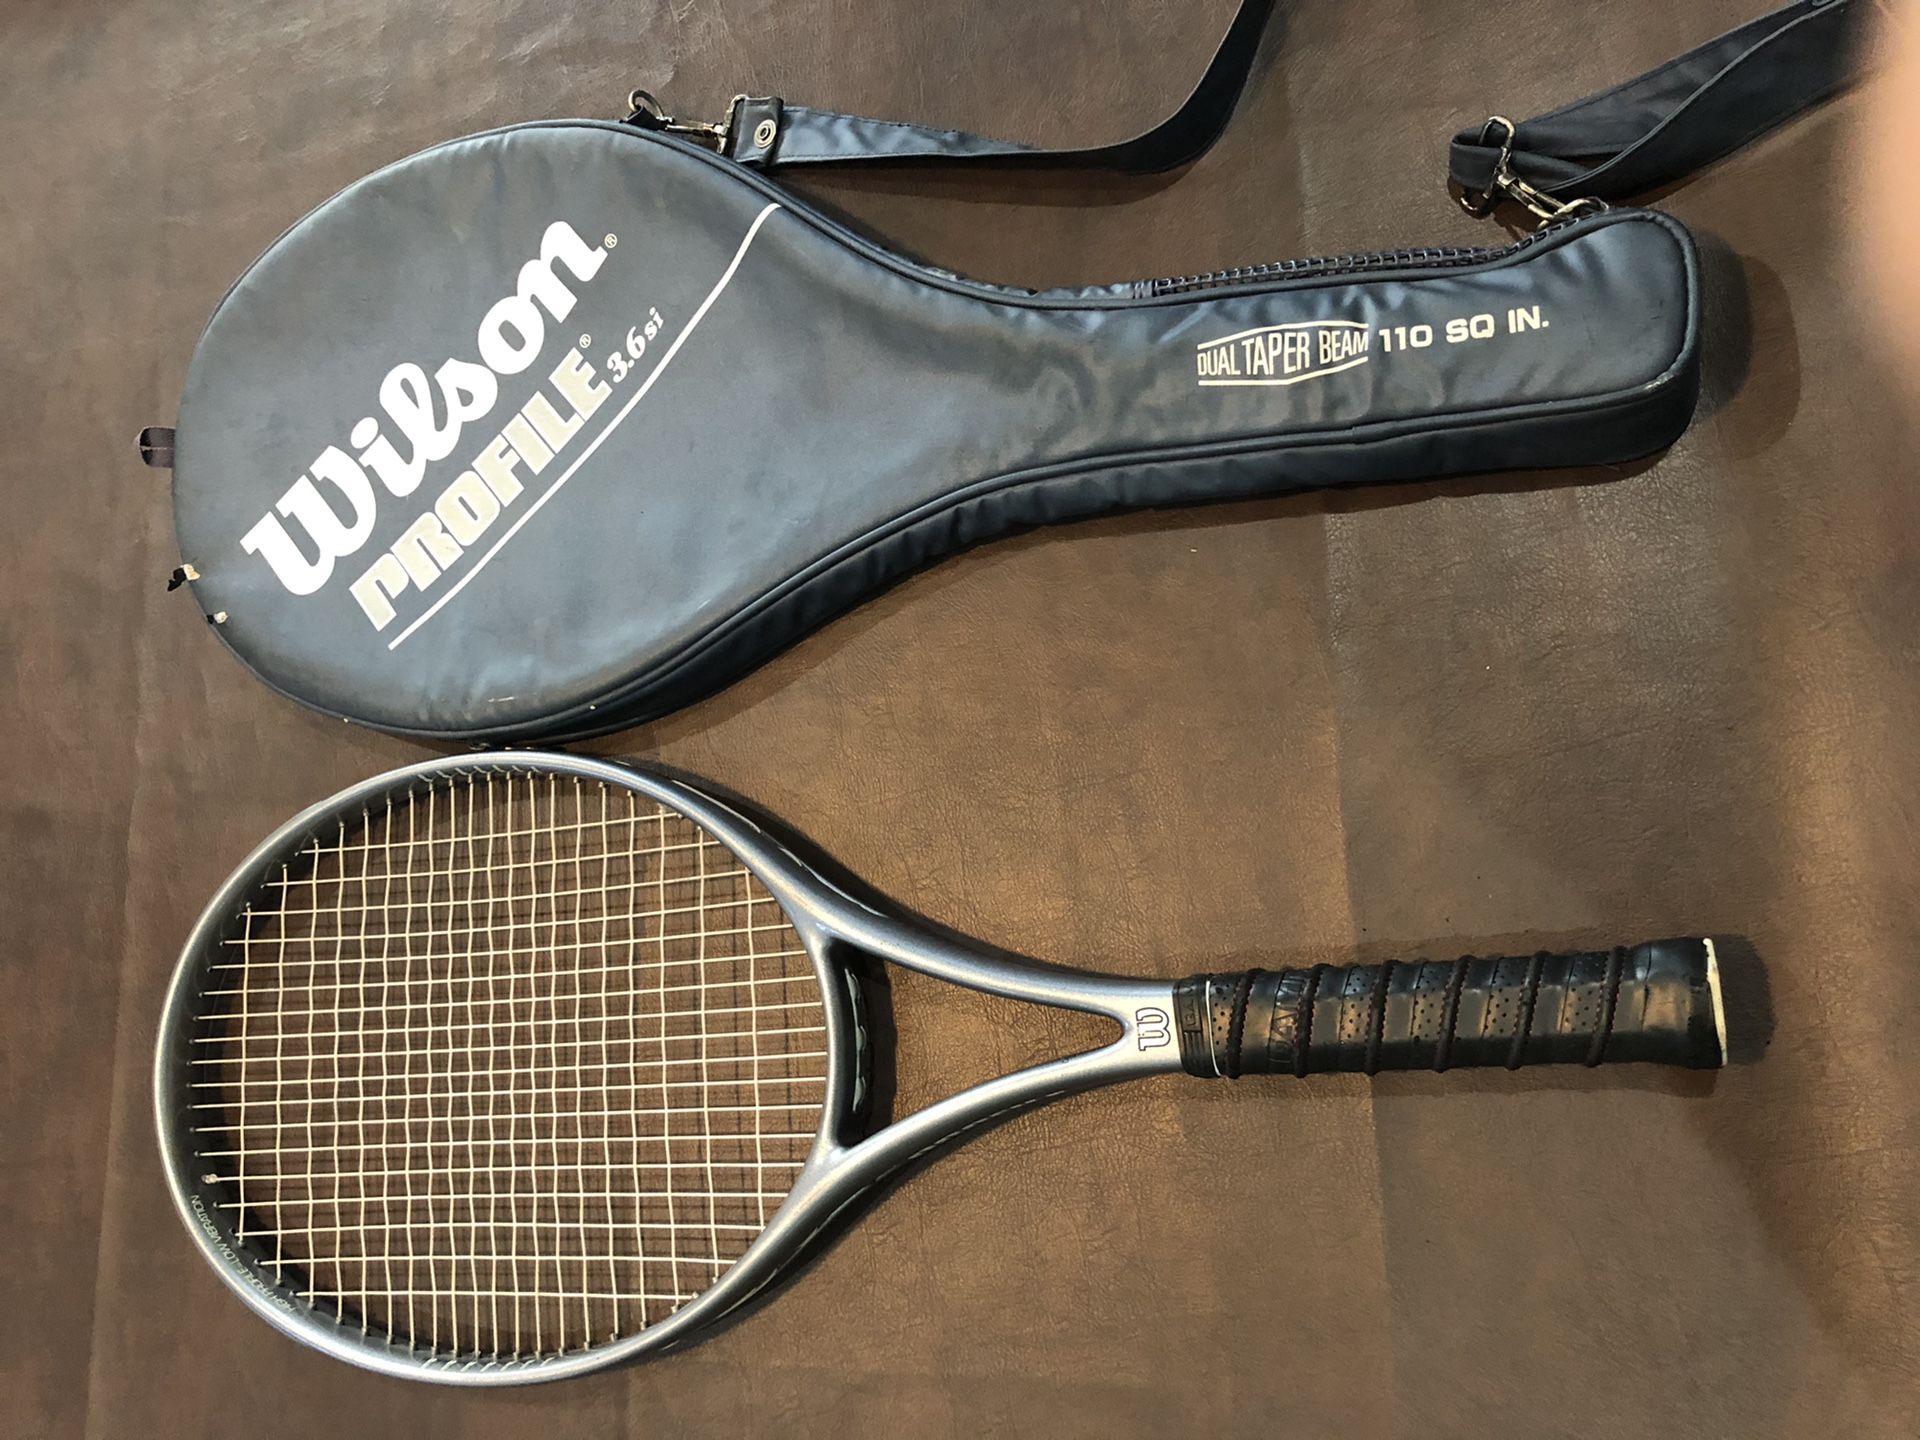 Racket racquet Tennis Wilson profile 3.6 $40 OBO